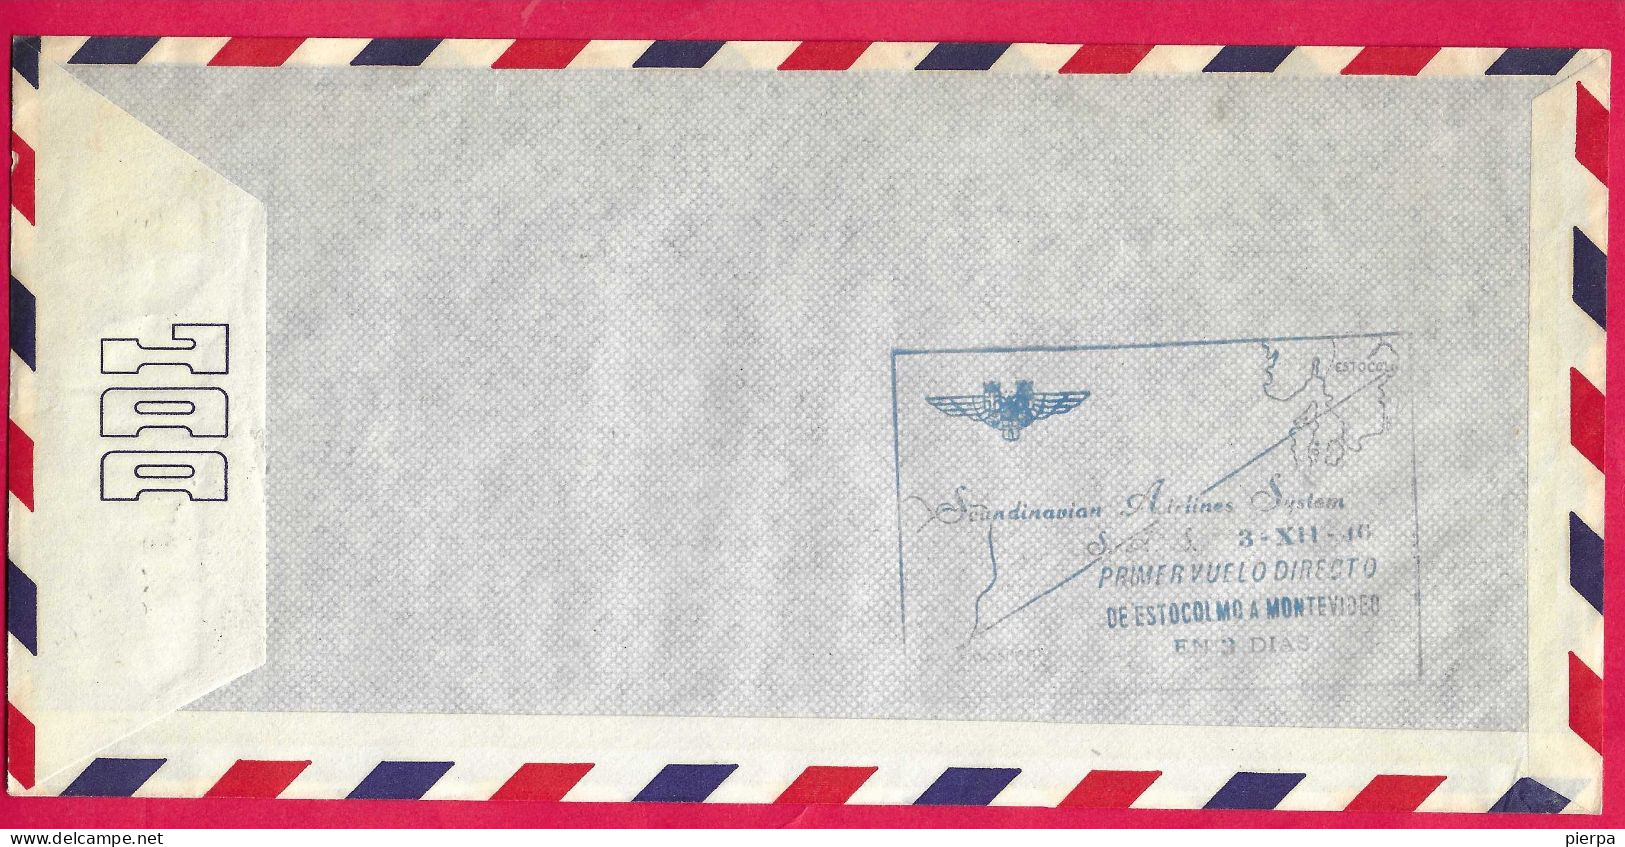 DANMARK - FIRST FLIGHT LUFTHAVN FROM KONEHAVN TO MONTEVIDEO * 30.11.1946* ON COMMERCIAL SIZE ENVELOPE - Poste Aérienne